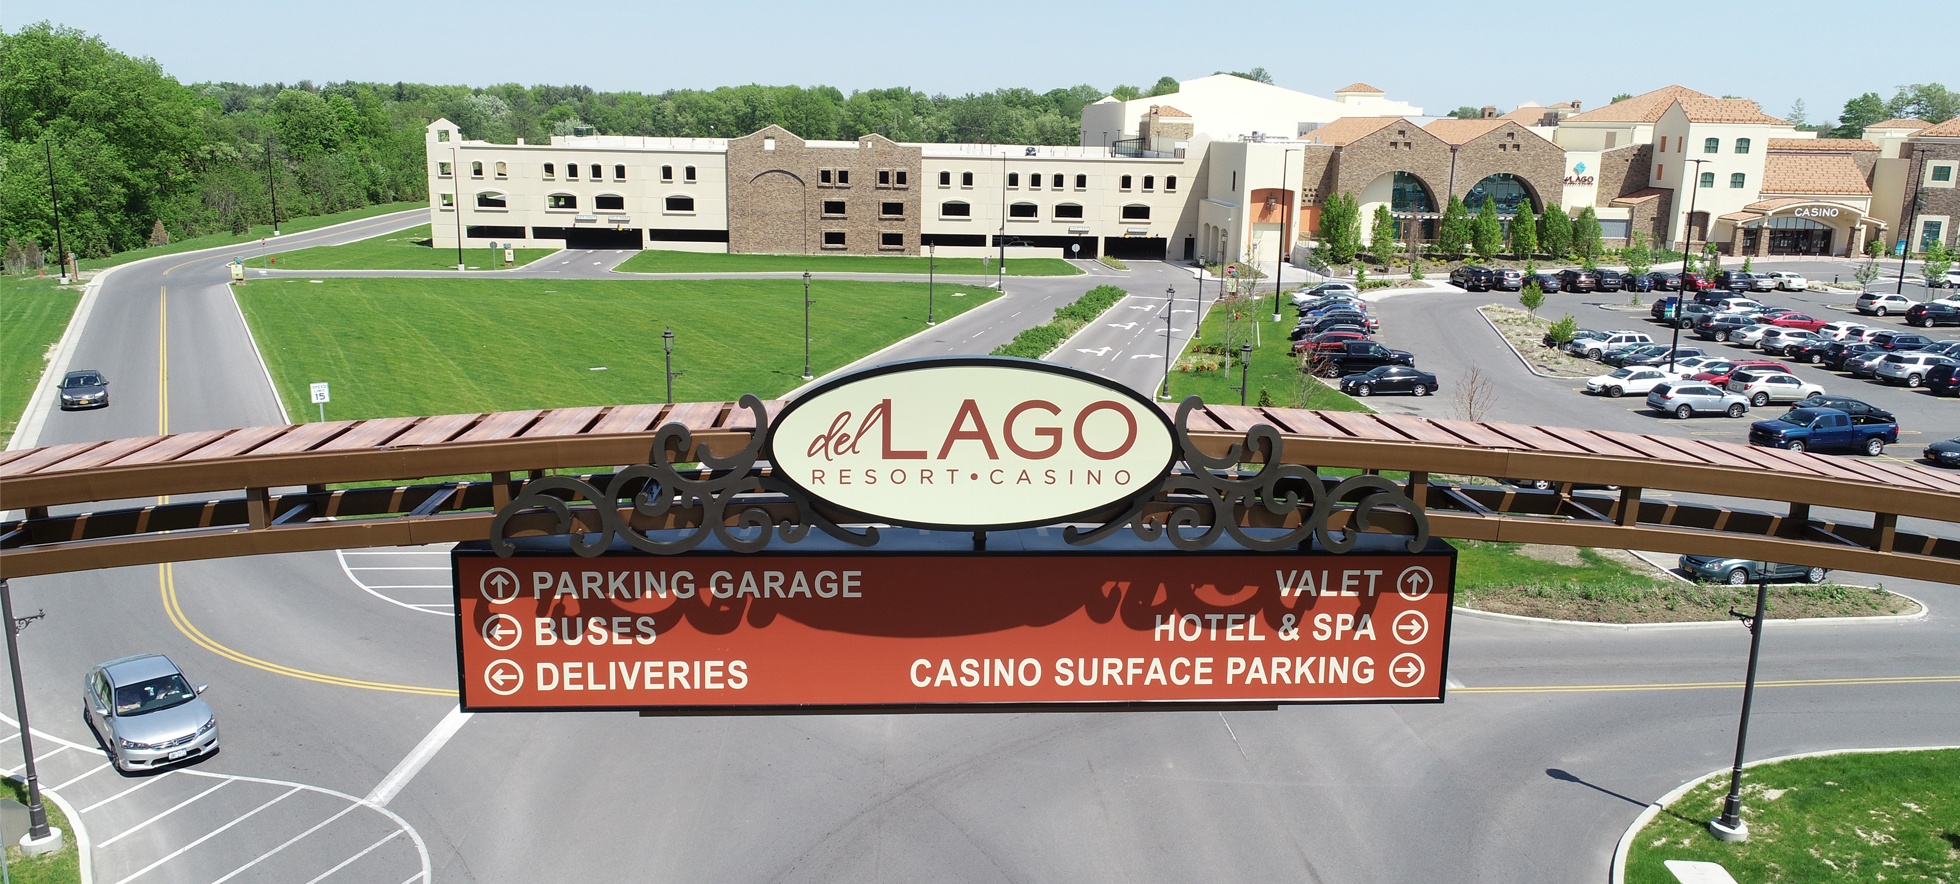 del lago resort casino layout